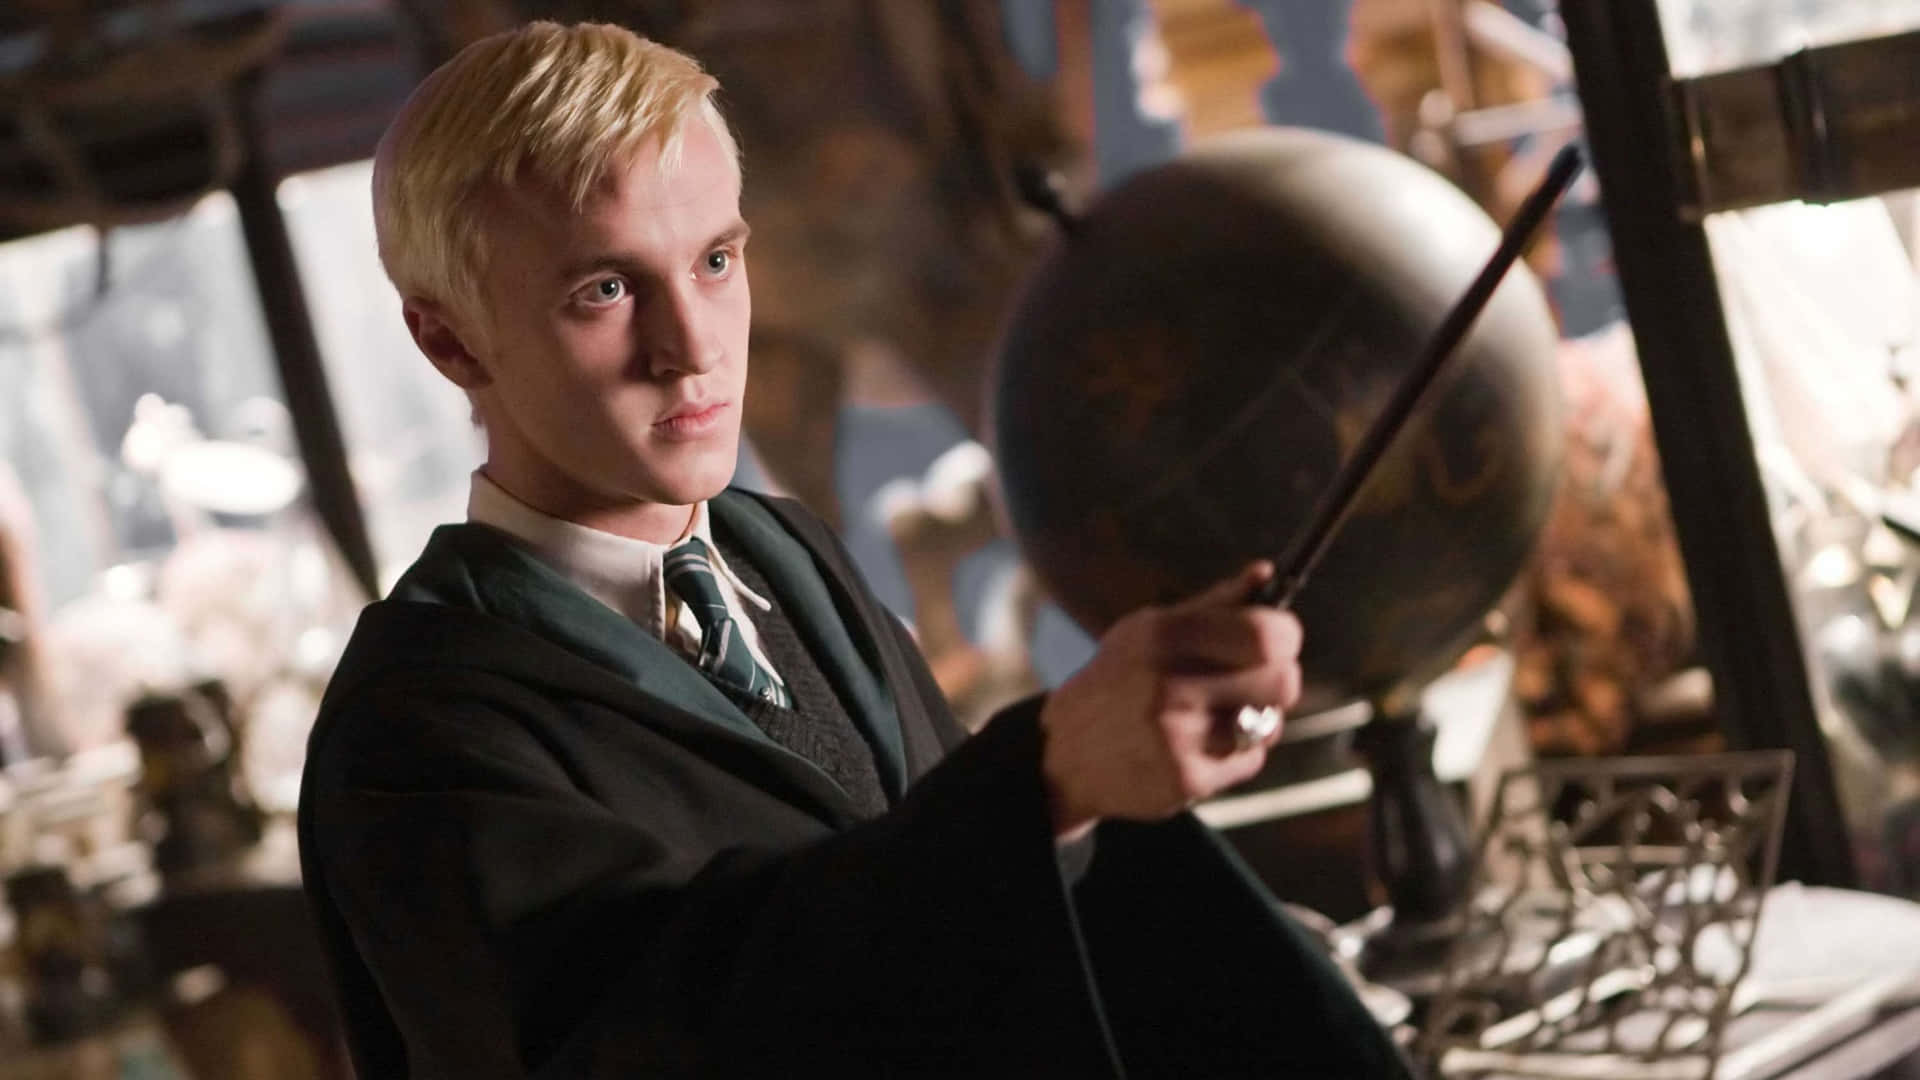 Draco Malfoy in Full Slytherin Attire